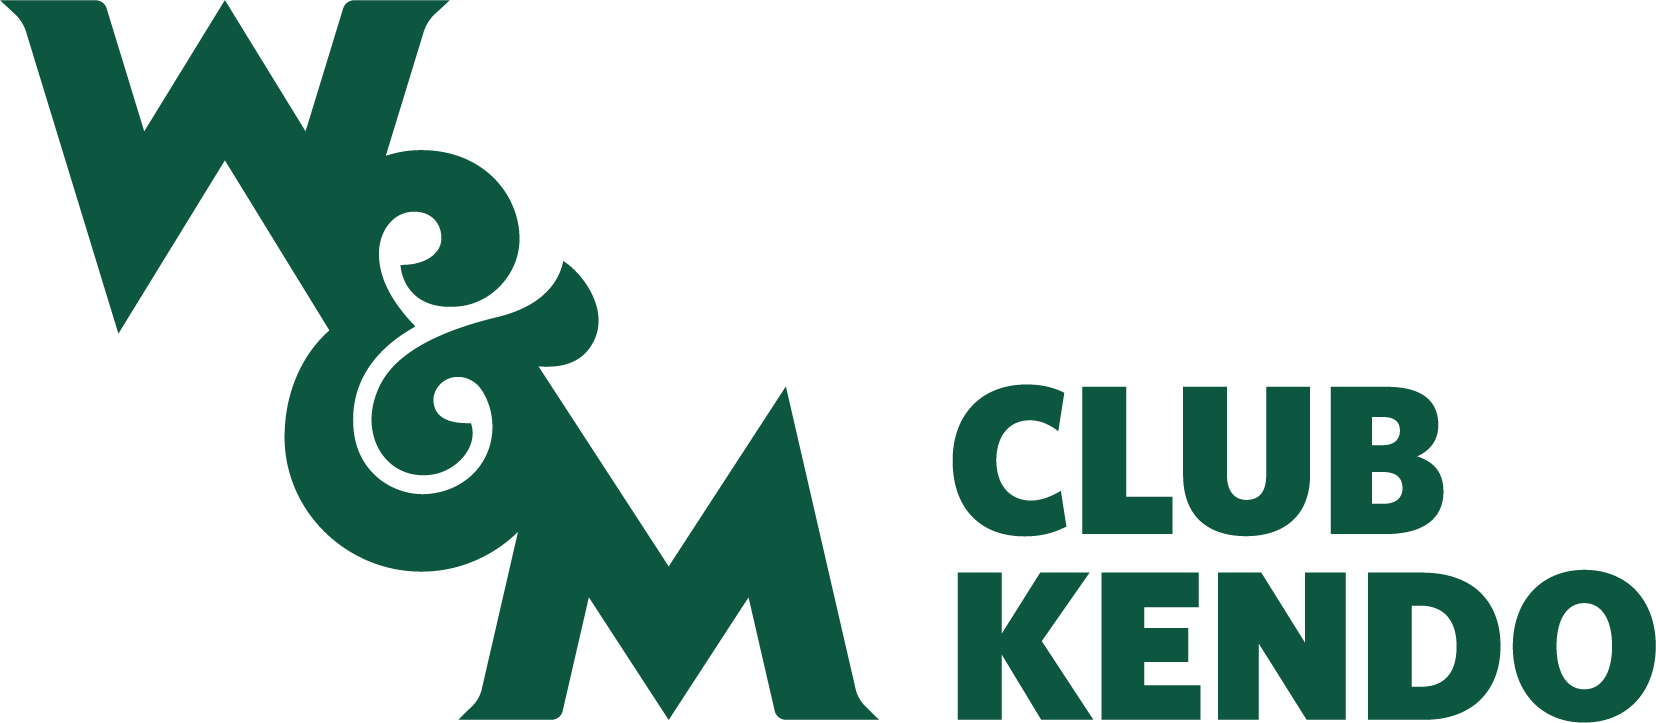 Kendo Club Logo